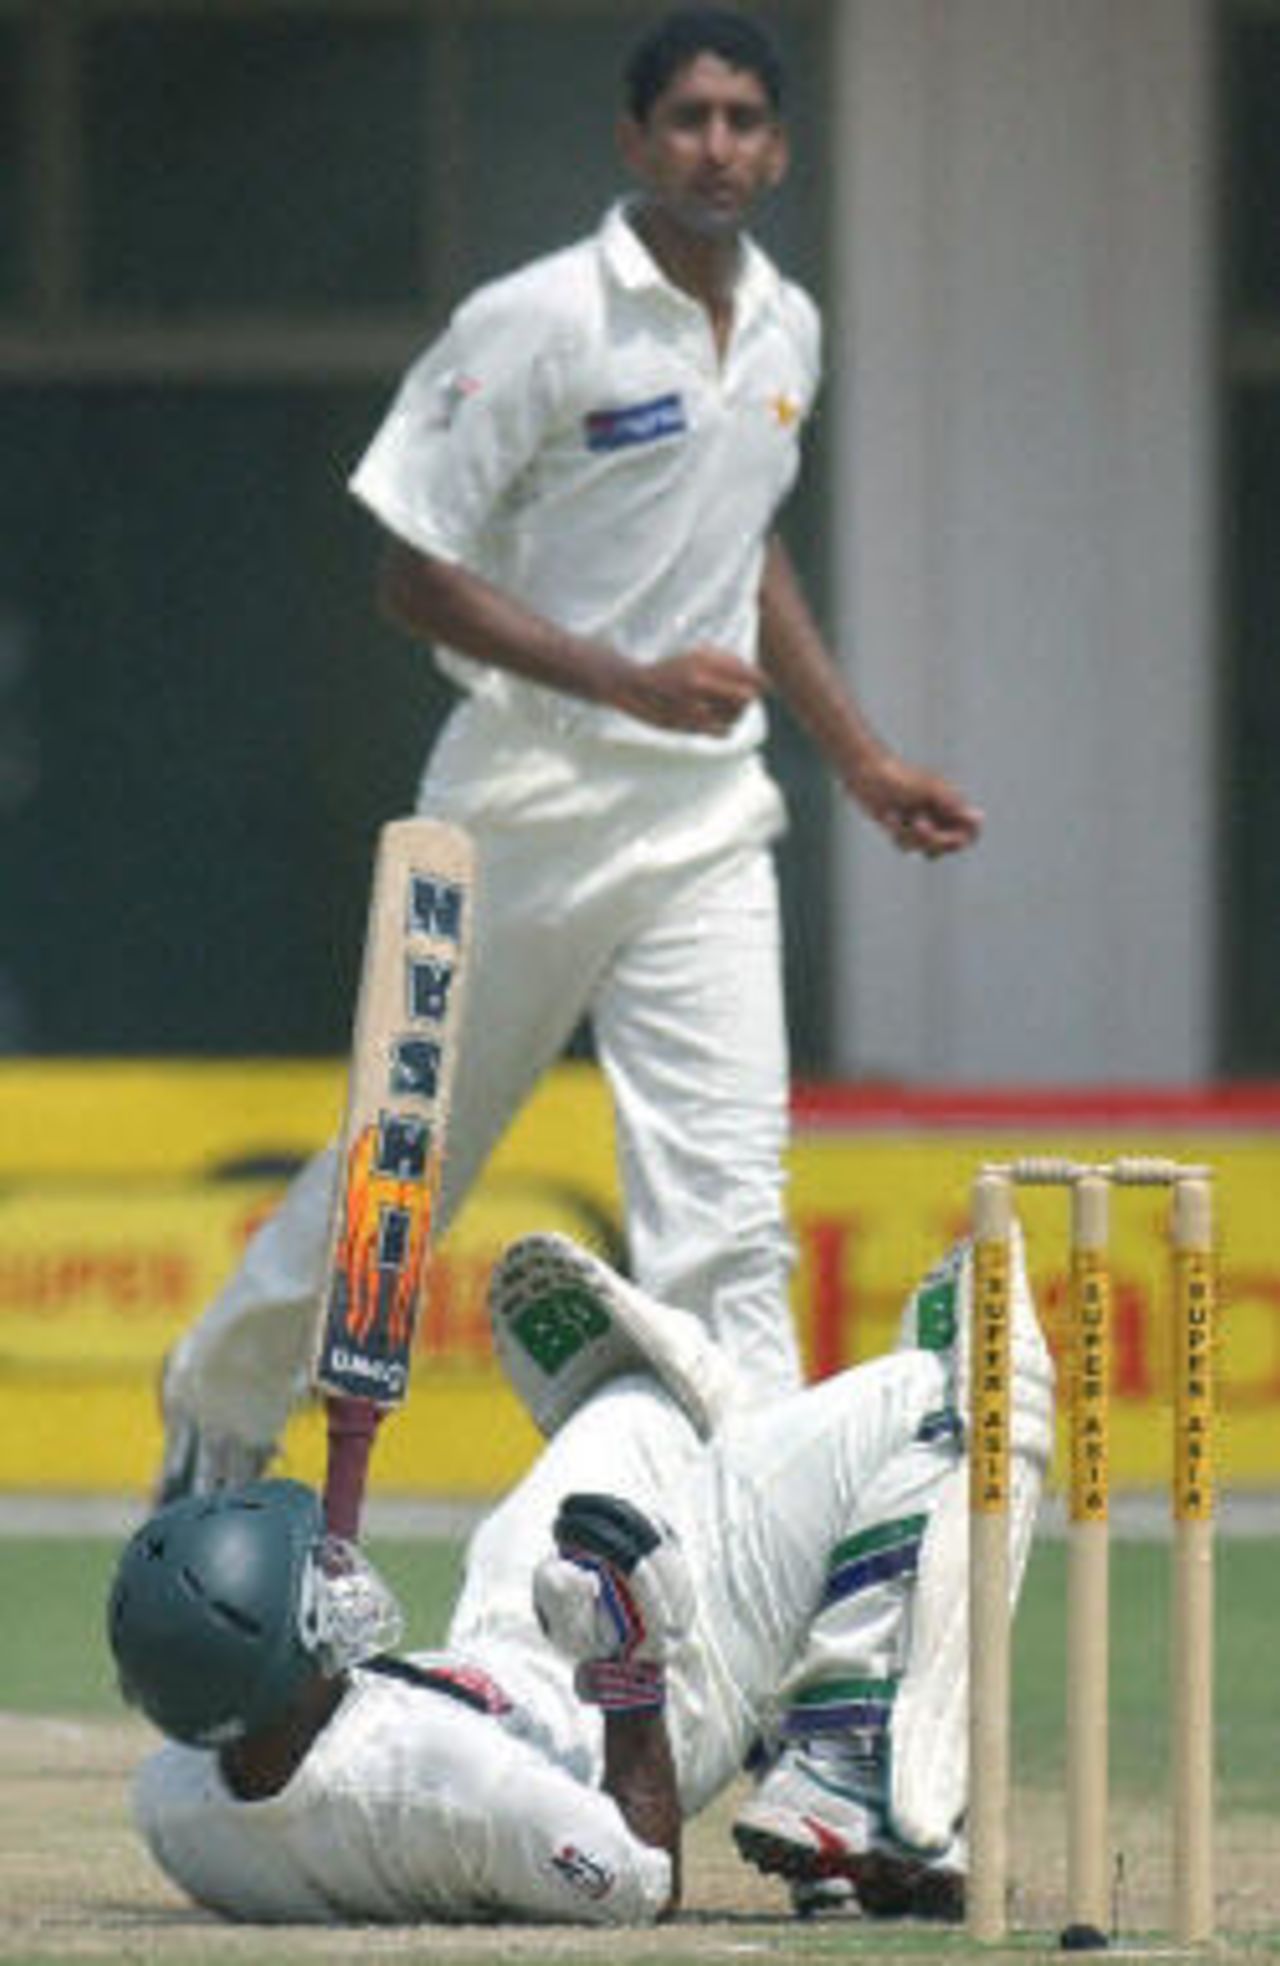 Shabbir Ahmed looks on as Rajin Saleh falls trying to avoid his bouncer, Pakistan v Bangladesh, 3rd Test, Multan, September 5, 2003.